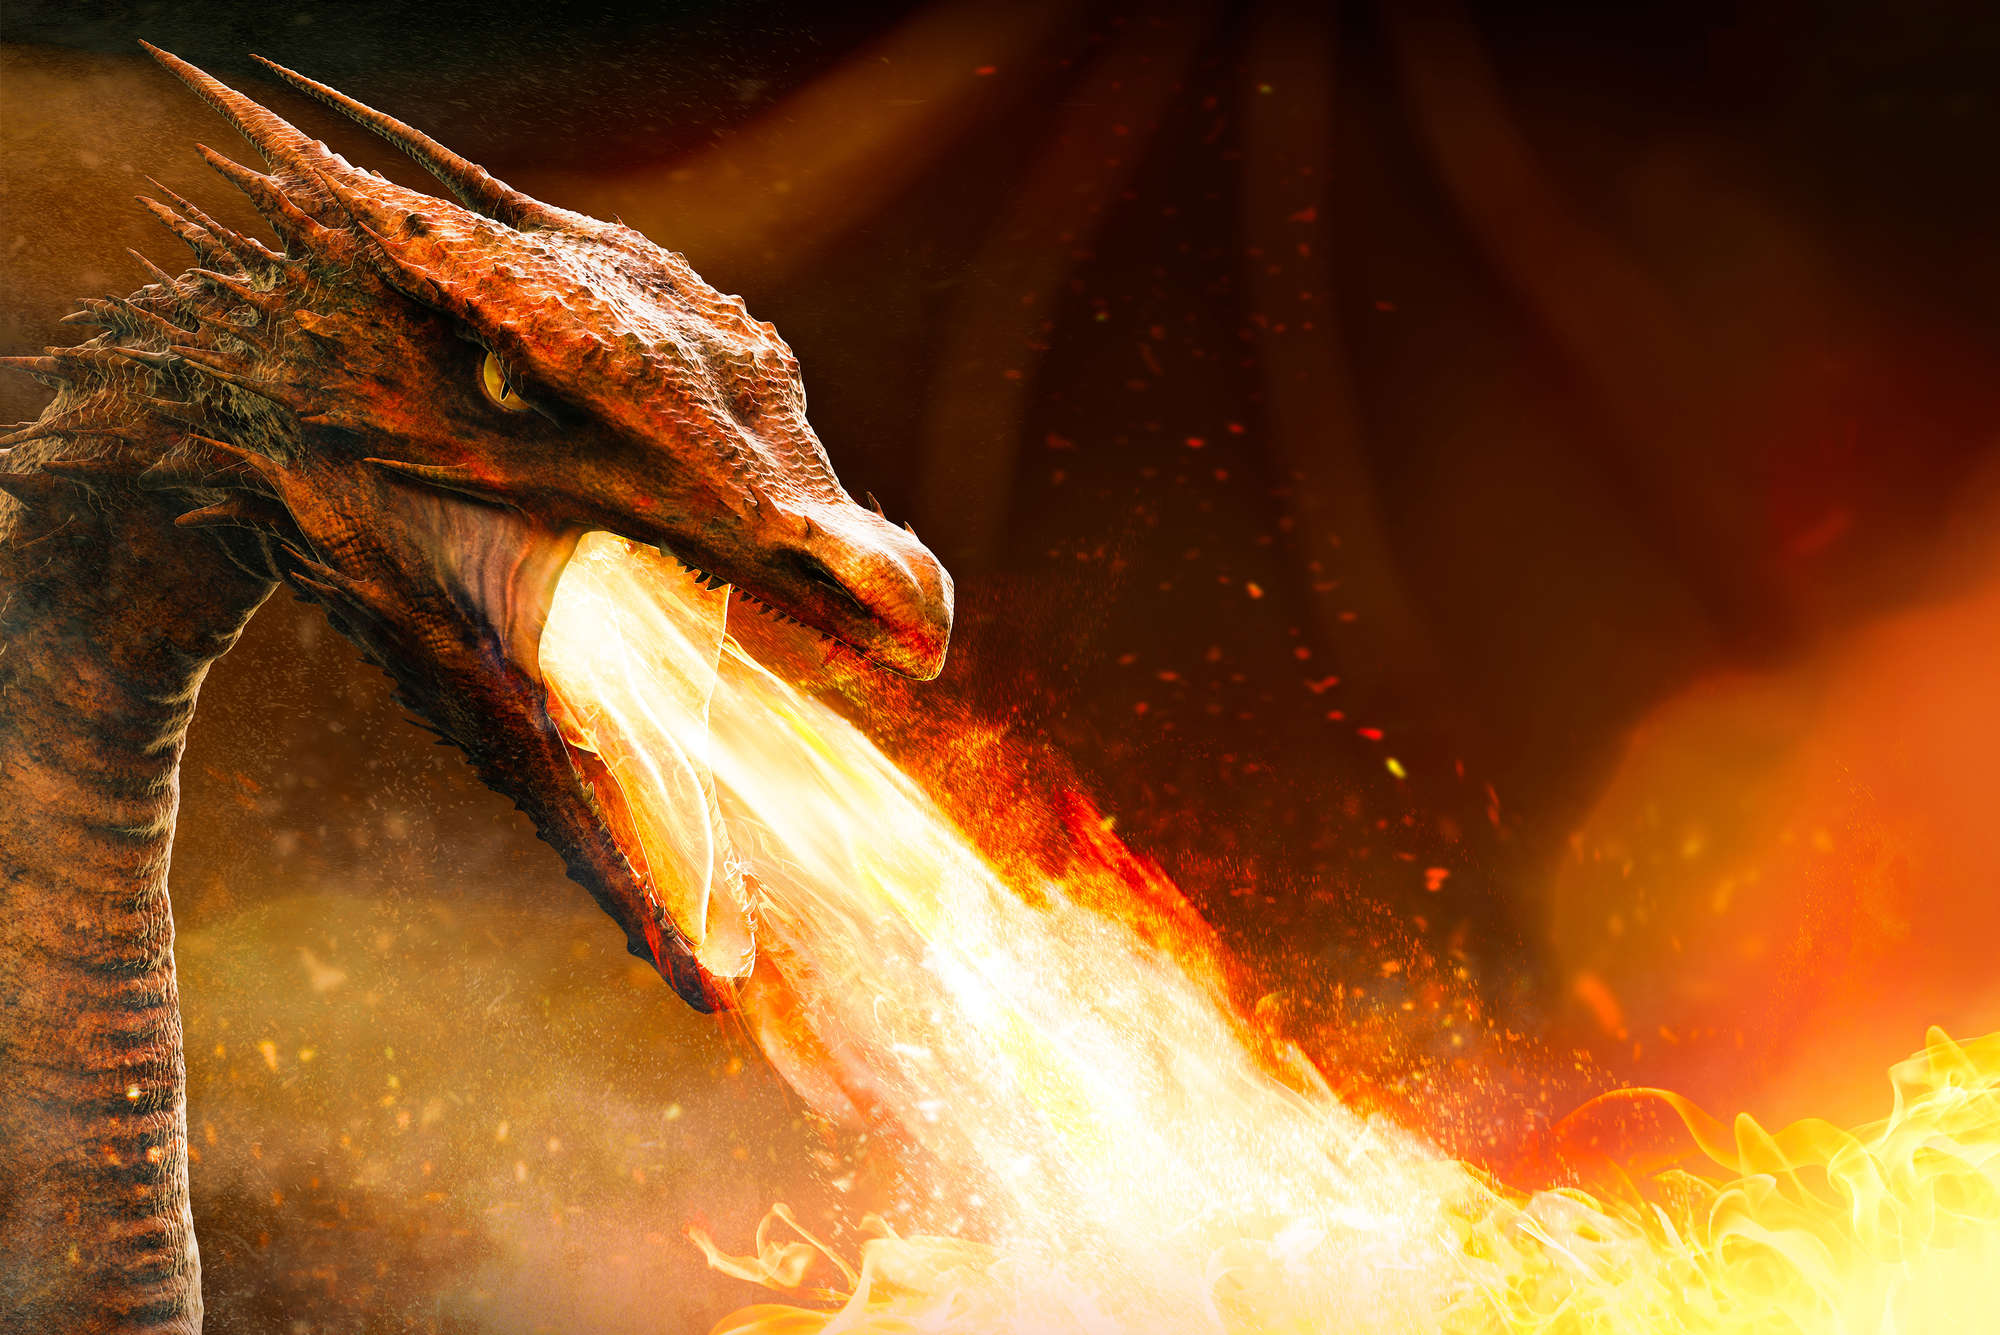             Fantasy mural fire-breathing dragon on matte smooth fleece
        